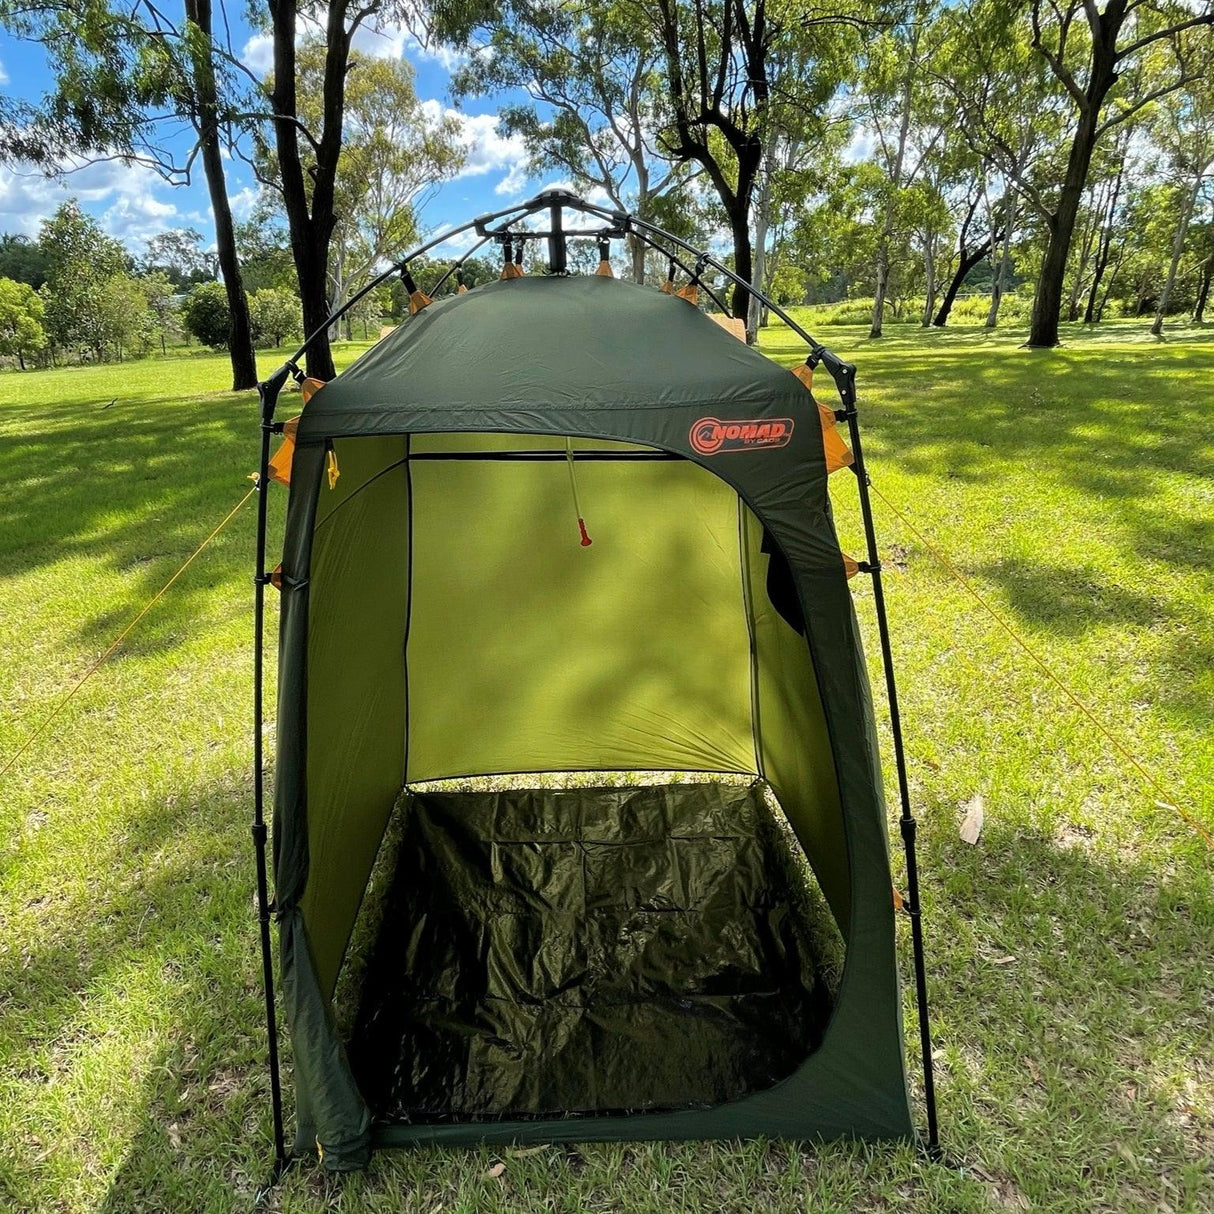 NOMAD Ensuite Pop-up Tent with Solar Shower